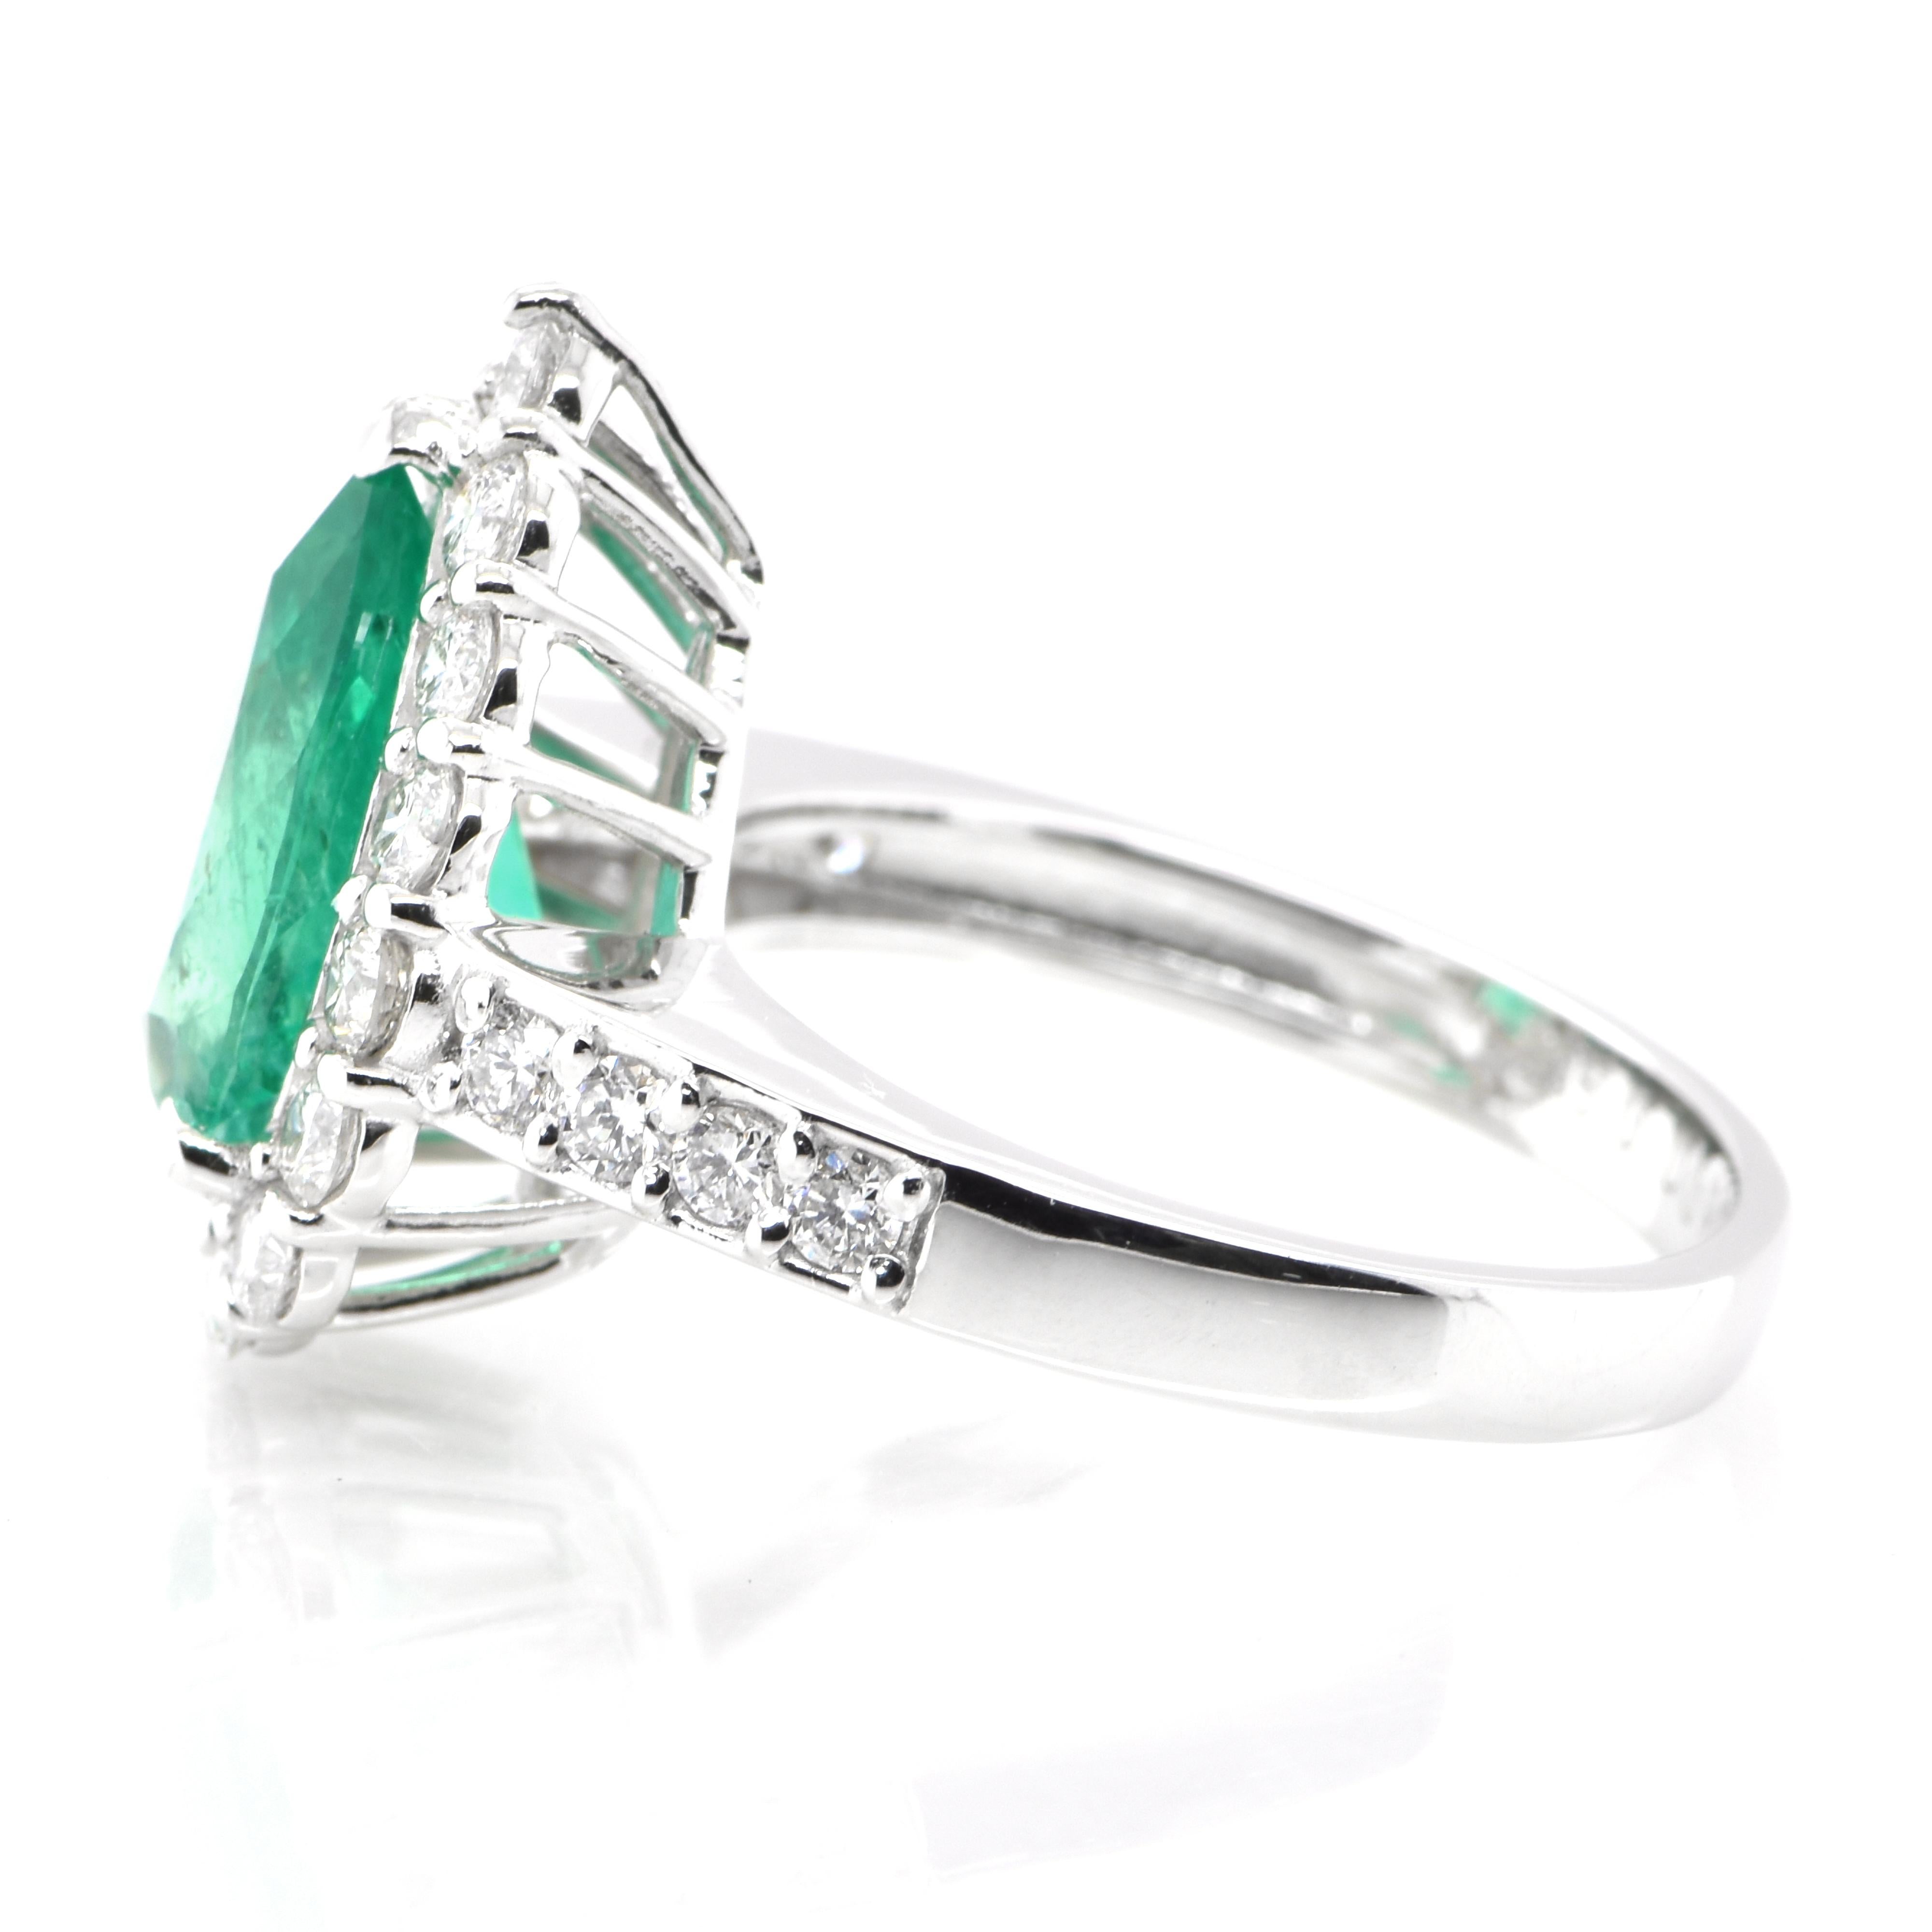 Pear Cut 2.50 Carat Natural Pear-Cut Emerald and Diamond Ring Set in Platinum